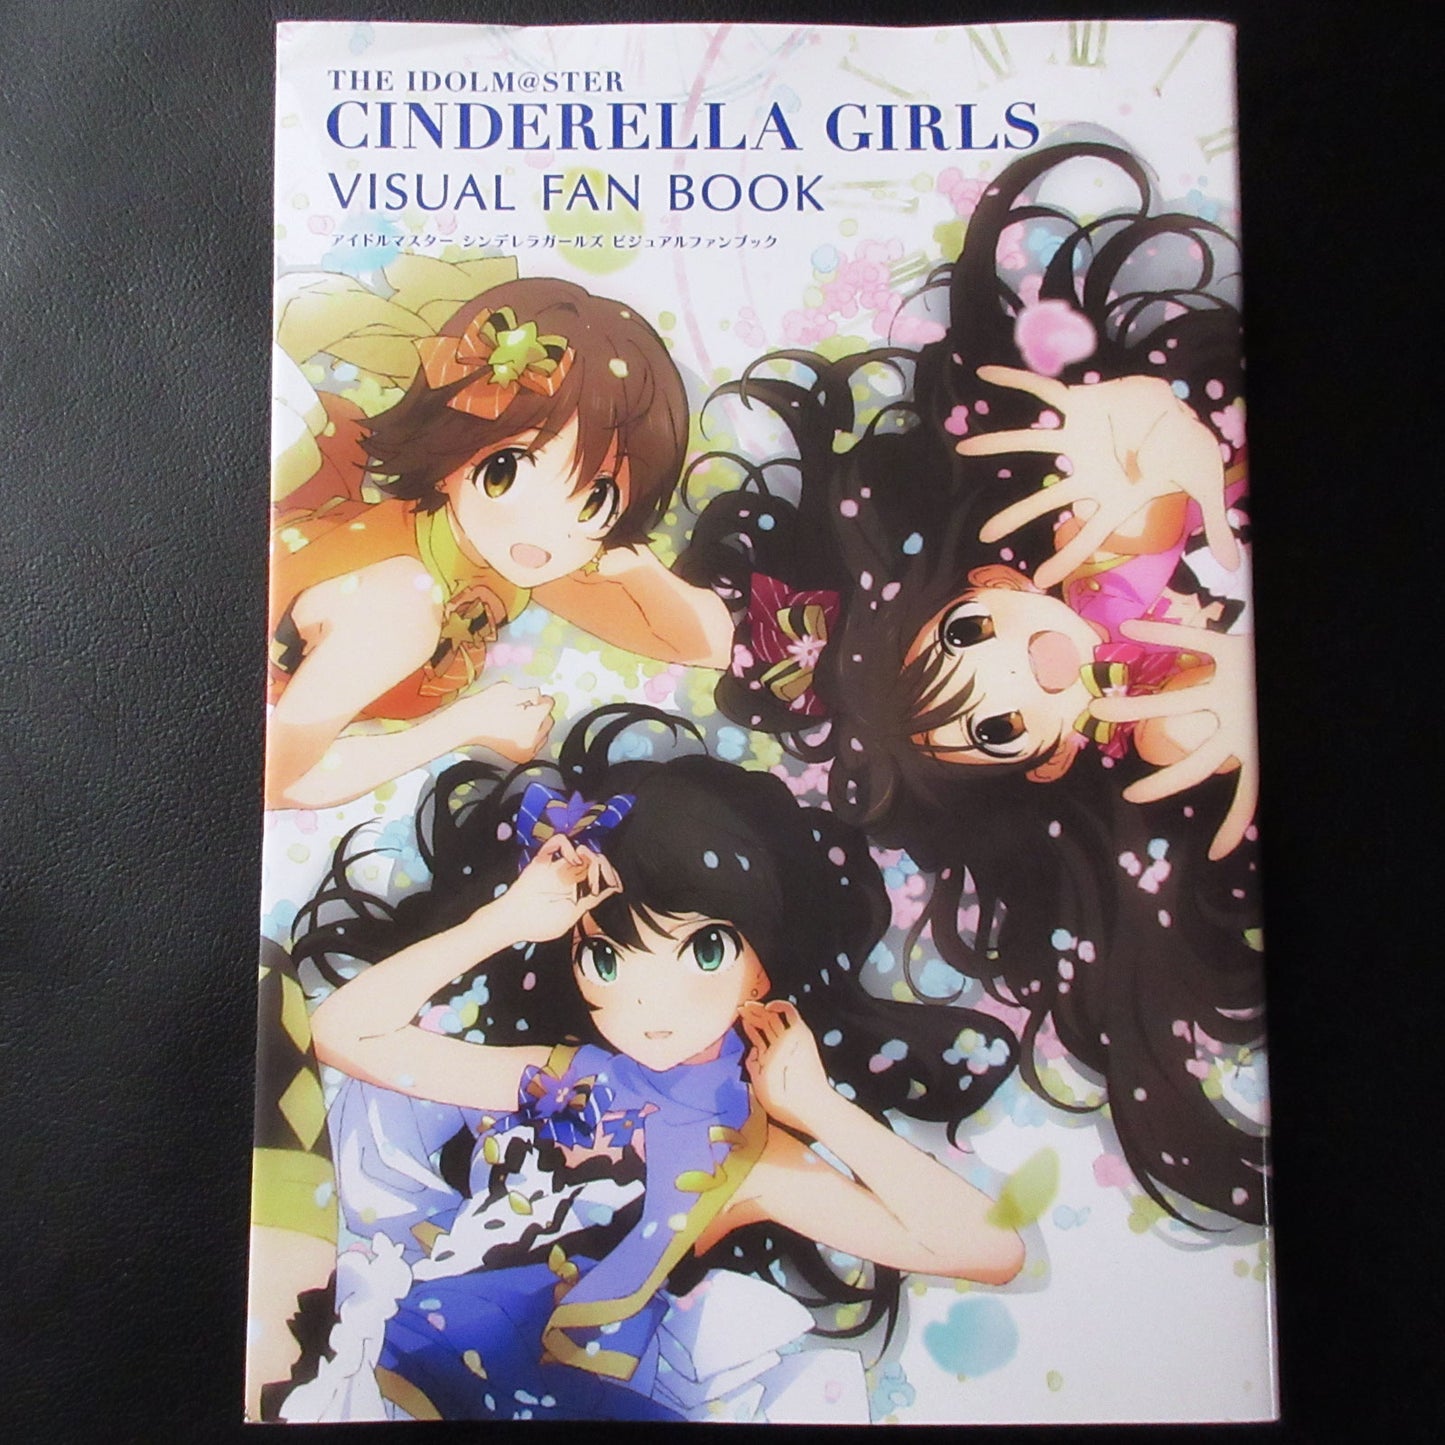 THE IDOLMASTER CINDERELLA GIRLS VISUAL FAN BOOK